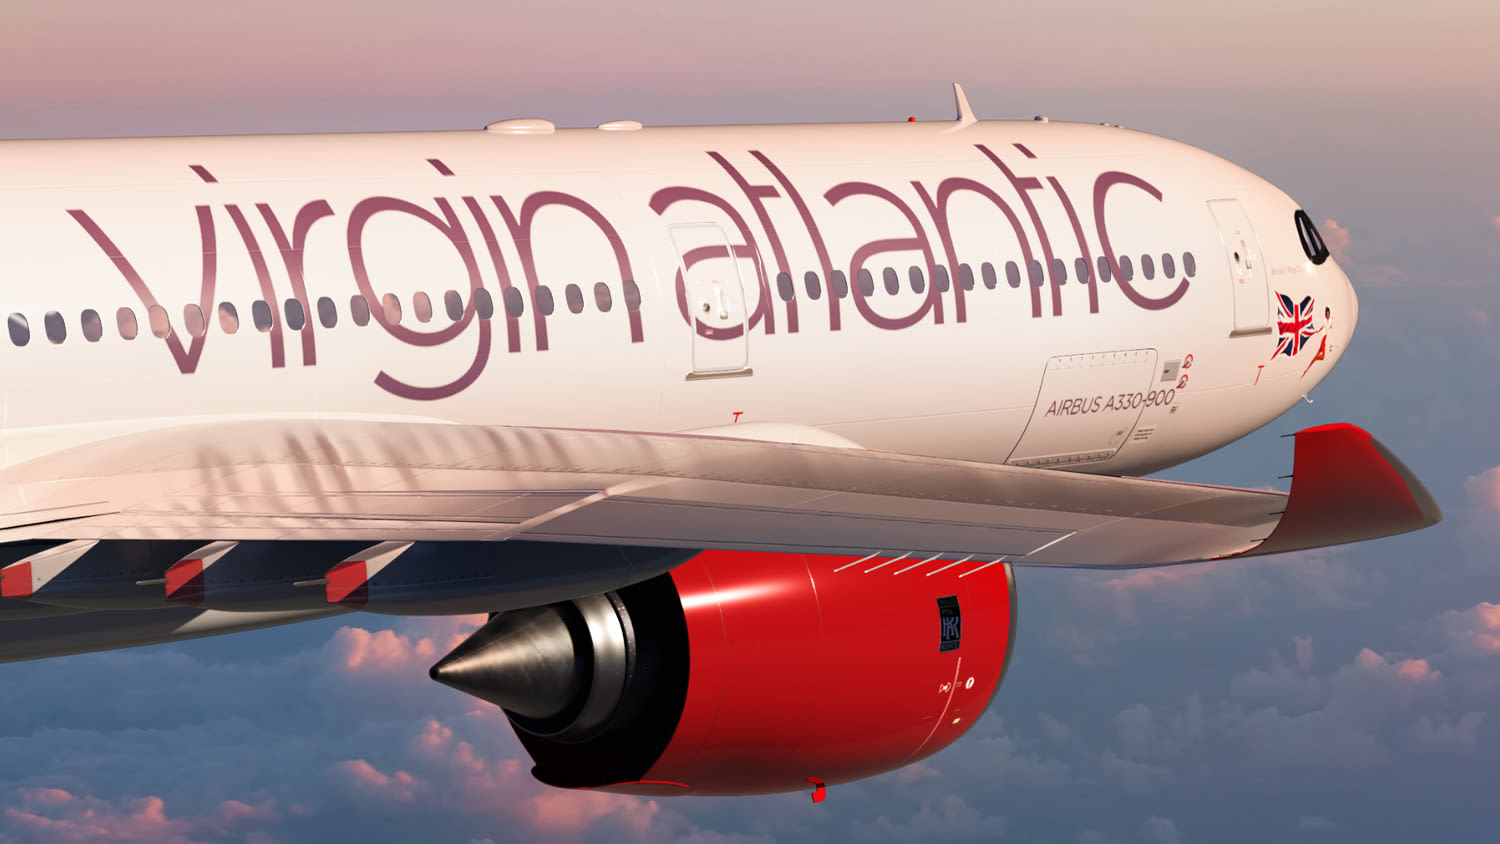 Virgin Atlantic's new Airbus A330neo